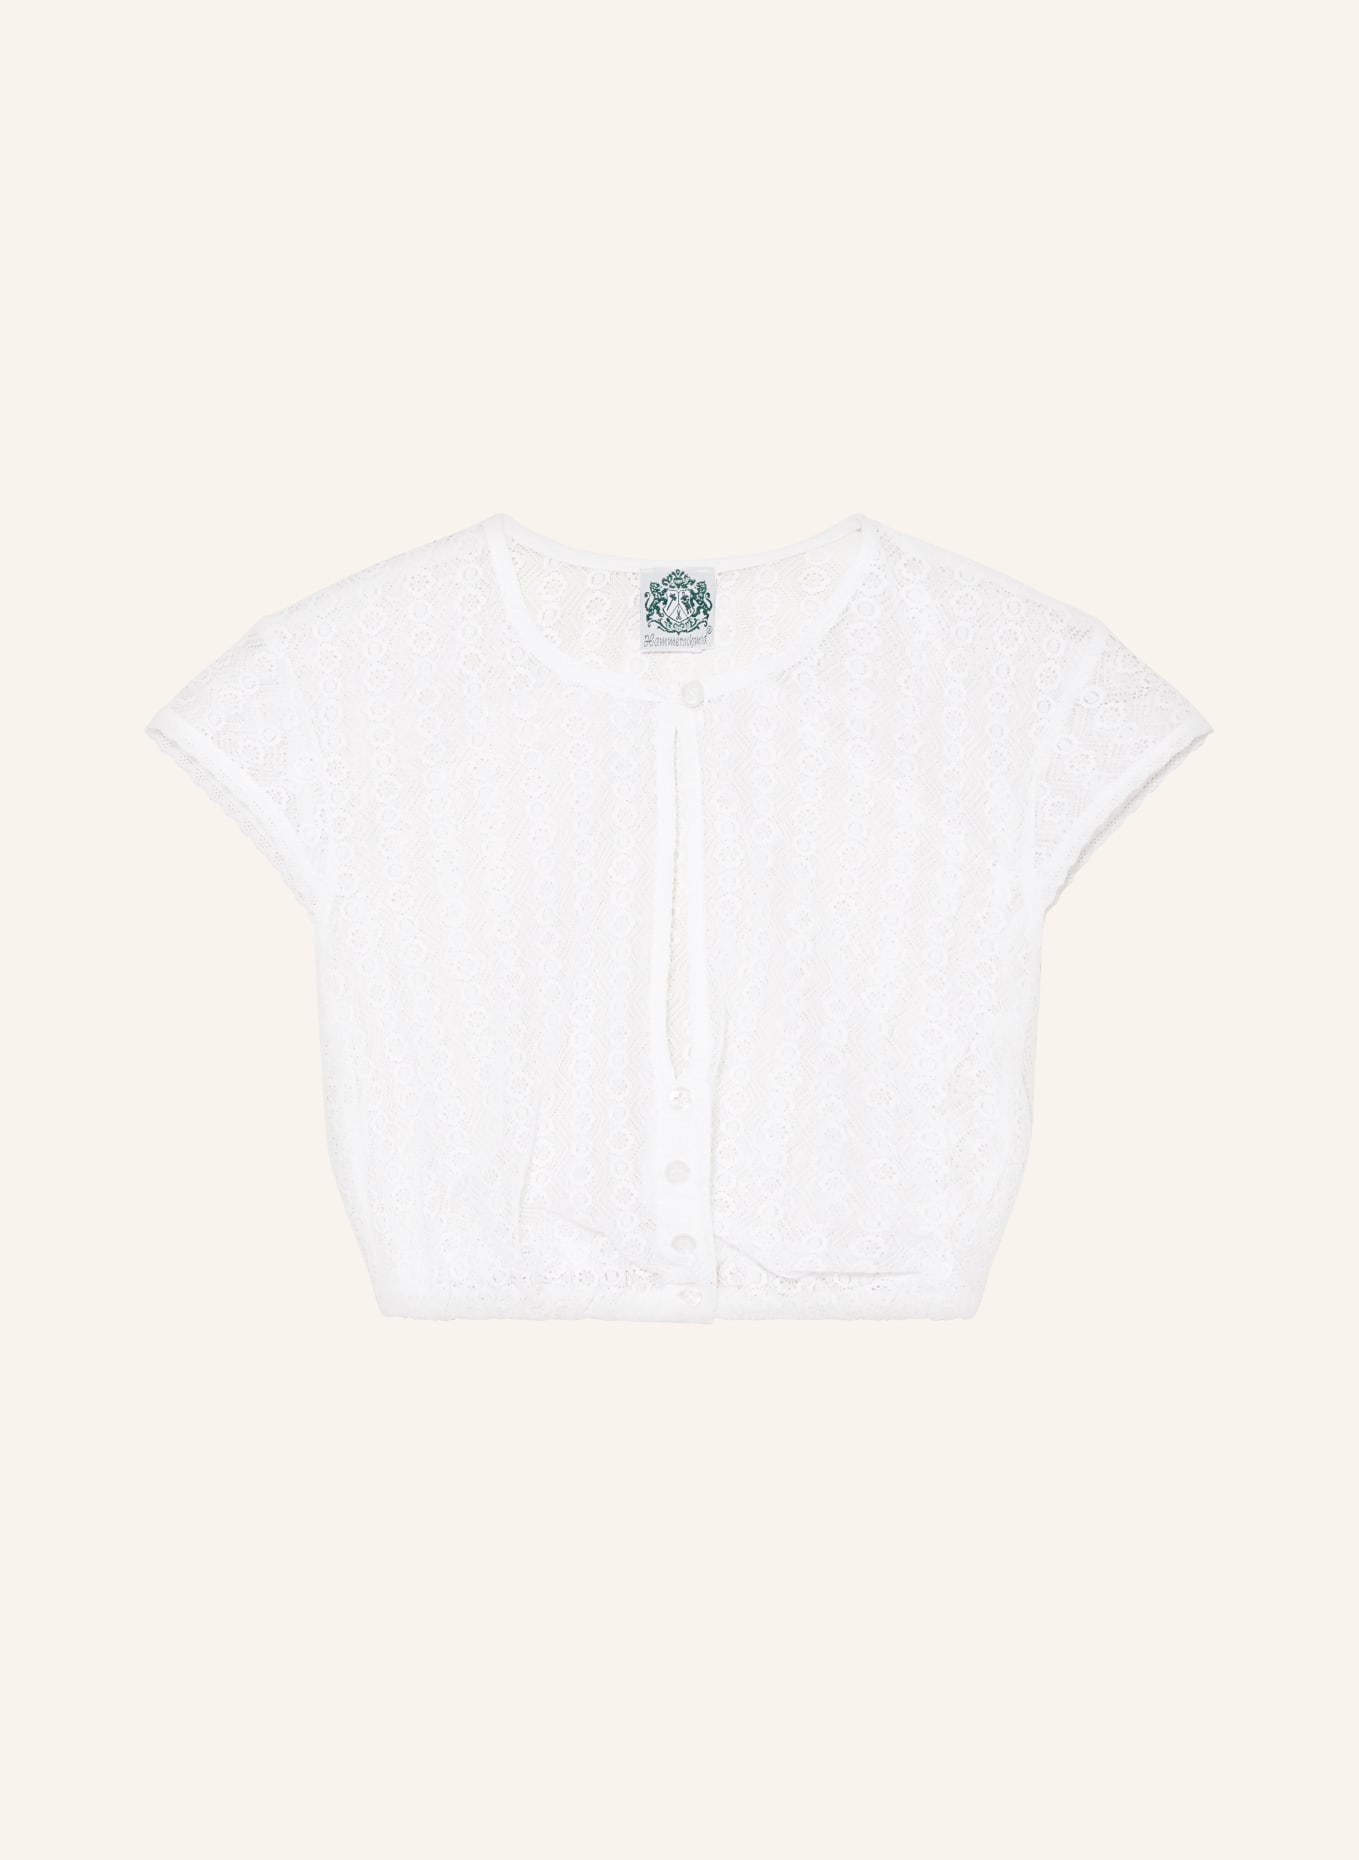 Hammerschmid Dirndl blouse DUNJA made of lace, Color: WHITE (Image 1)